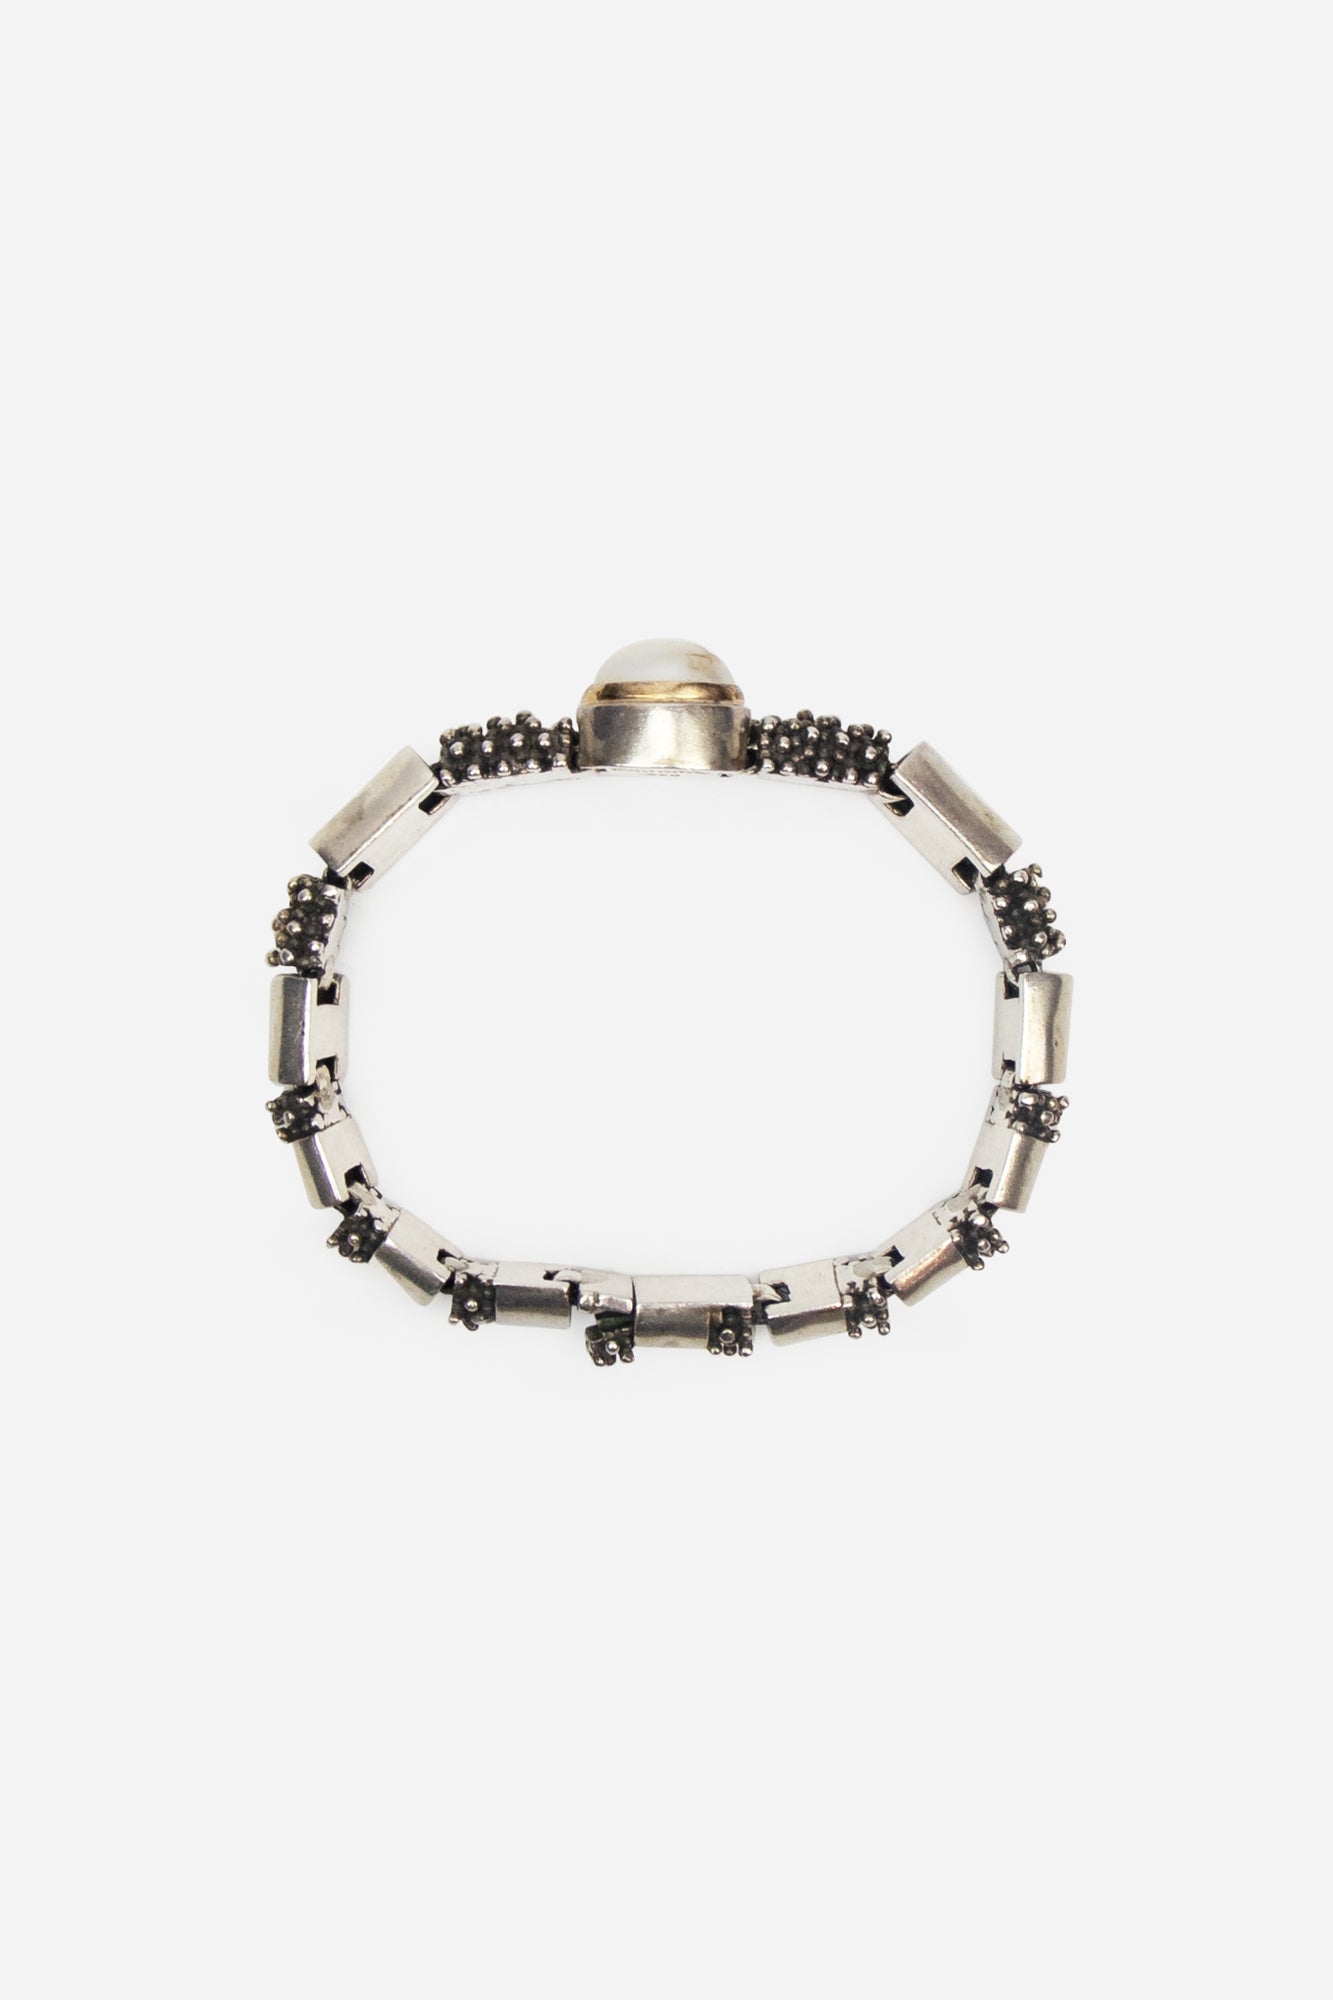 Oval Pearl Multi Section Bracelet